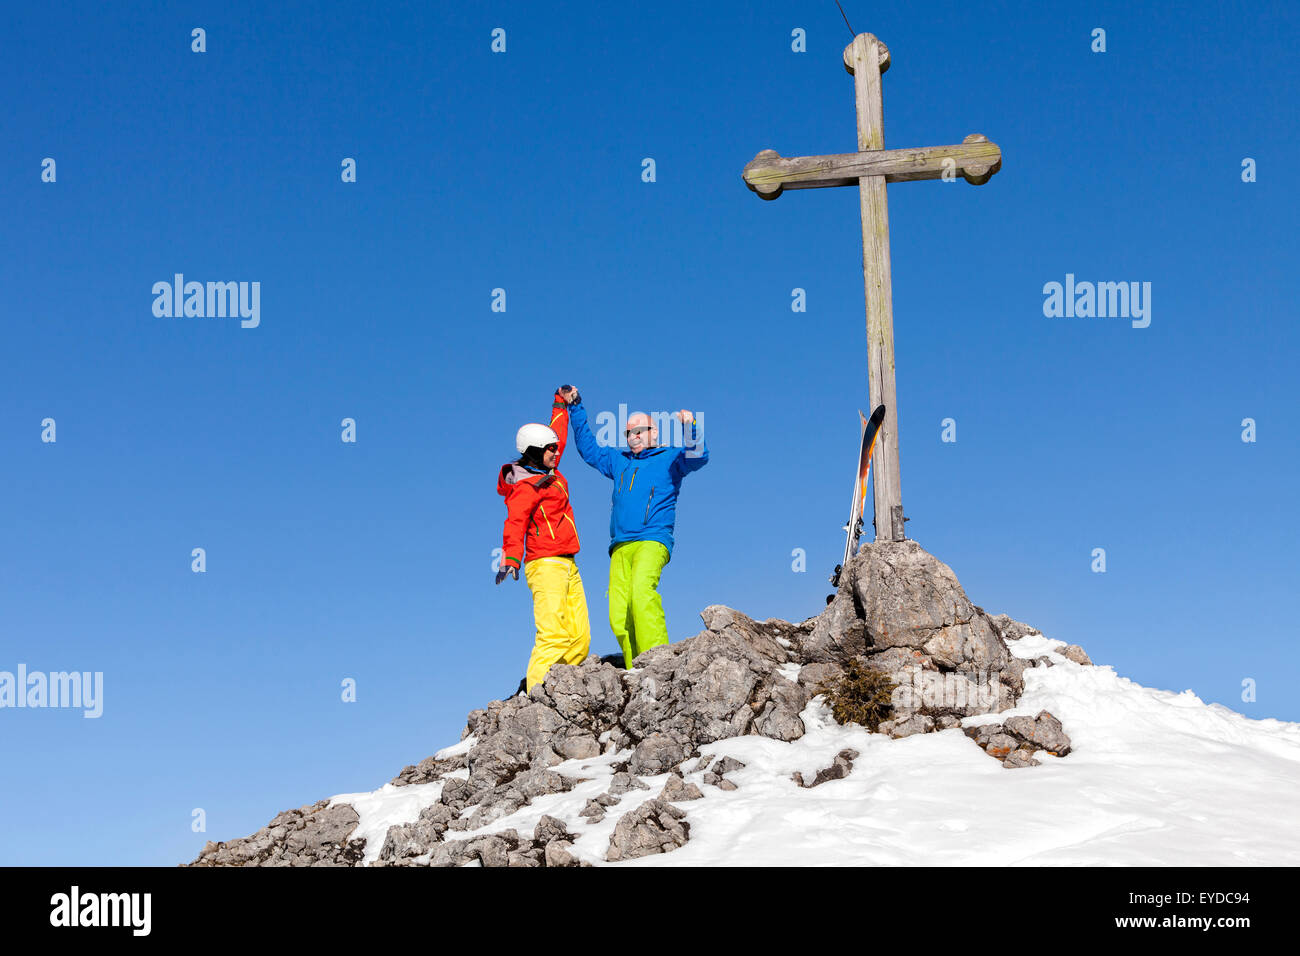 Ski holiday, Skiers cheering on mountain peak, Sudelfeld, Bavaria, Germany Stock Photo